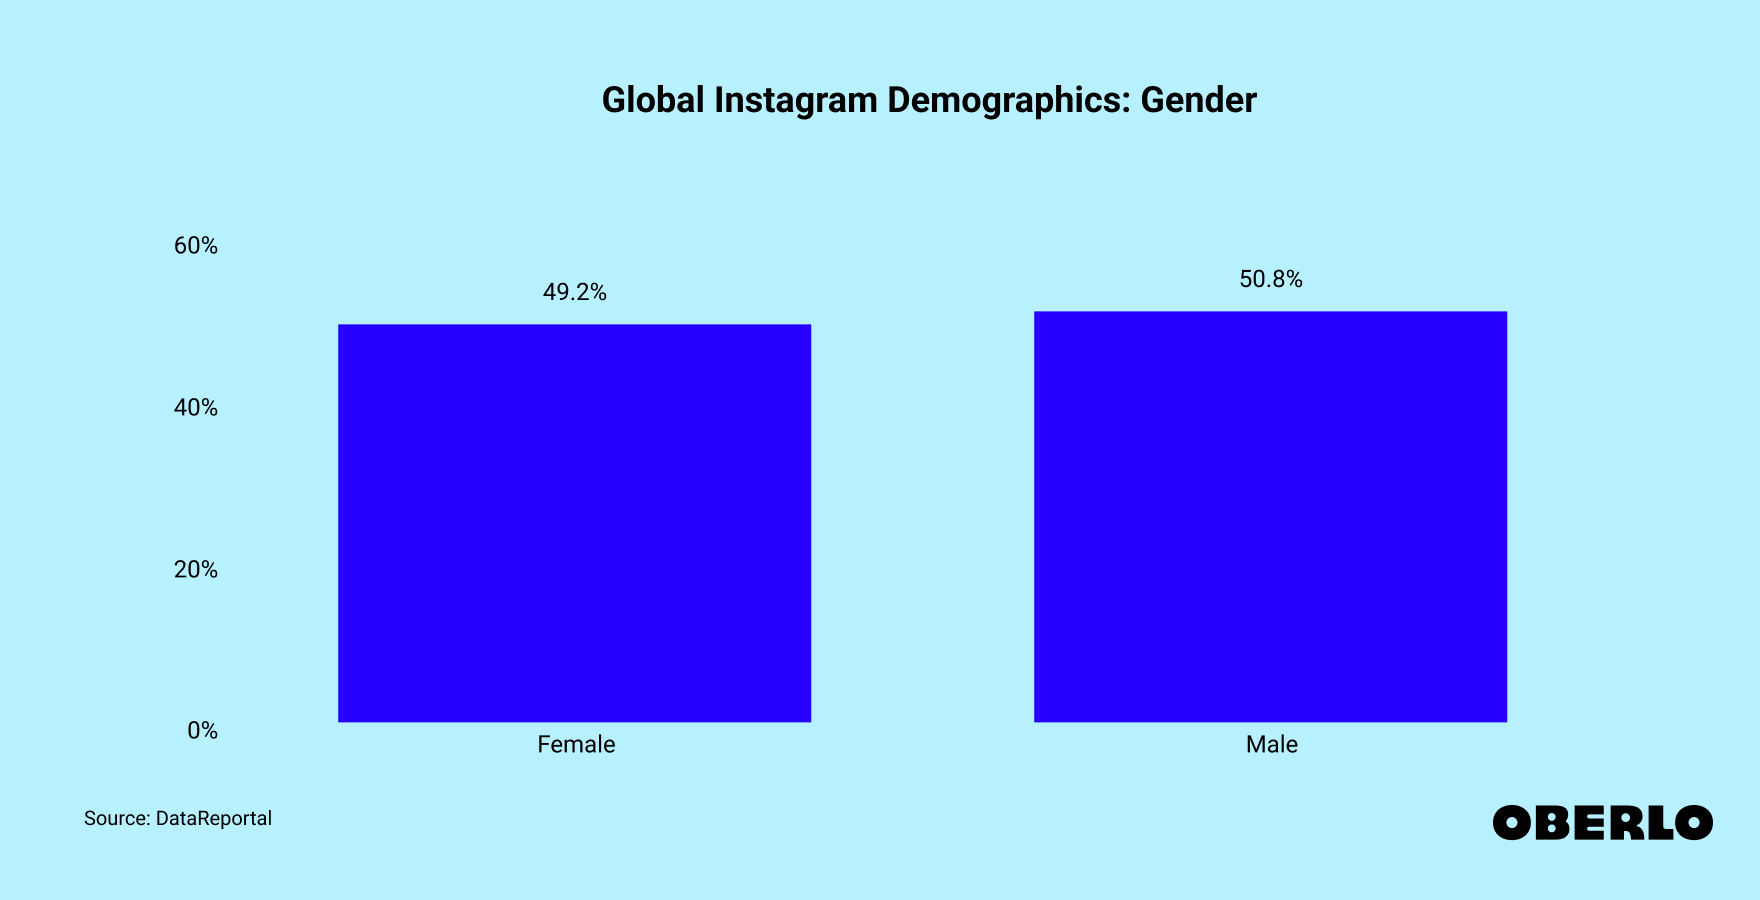 Chart showing Global Instagram Gender Demographics